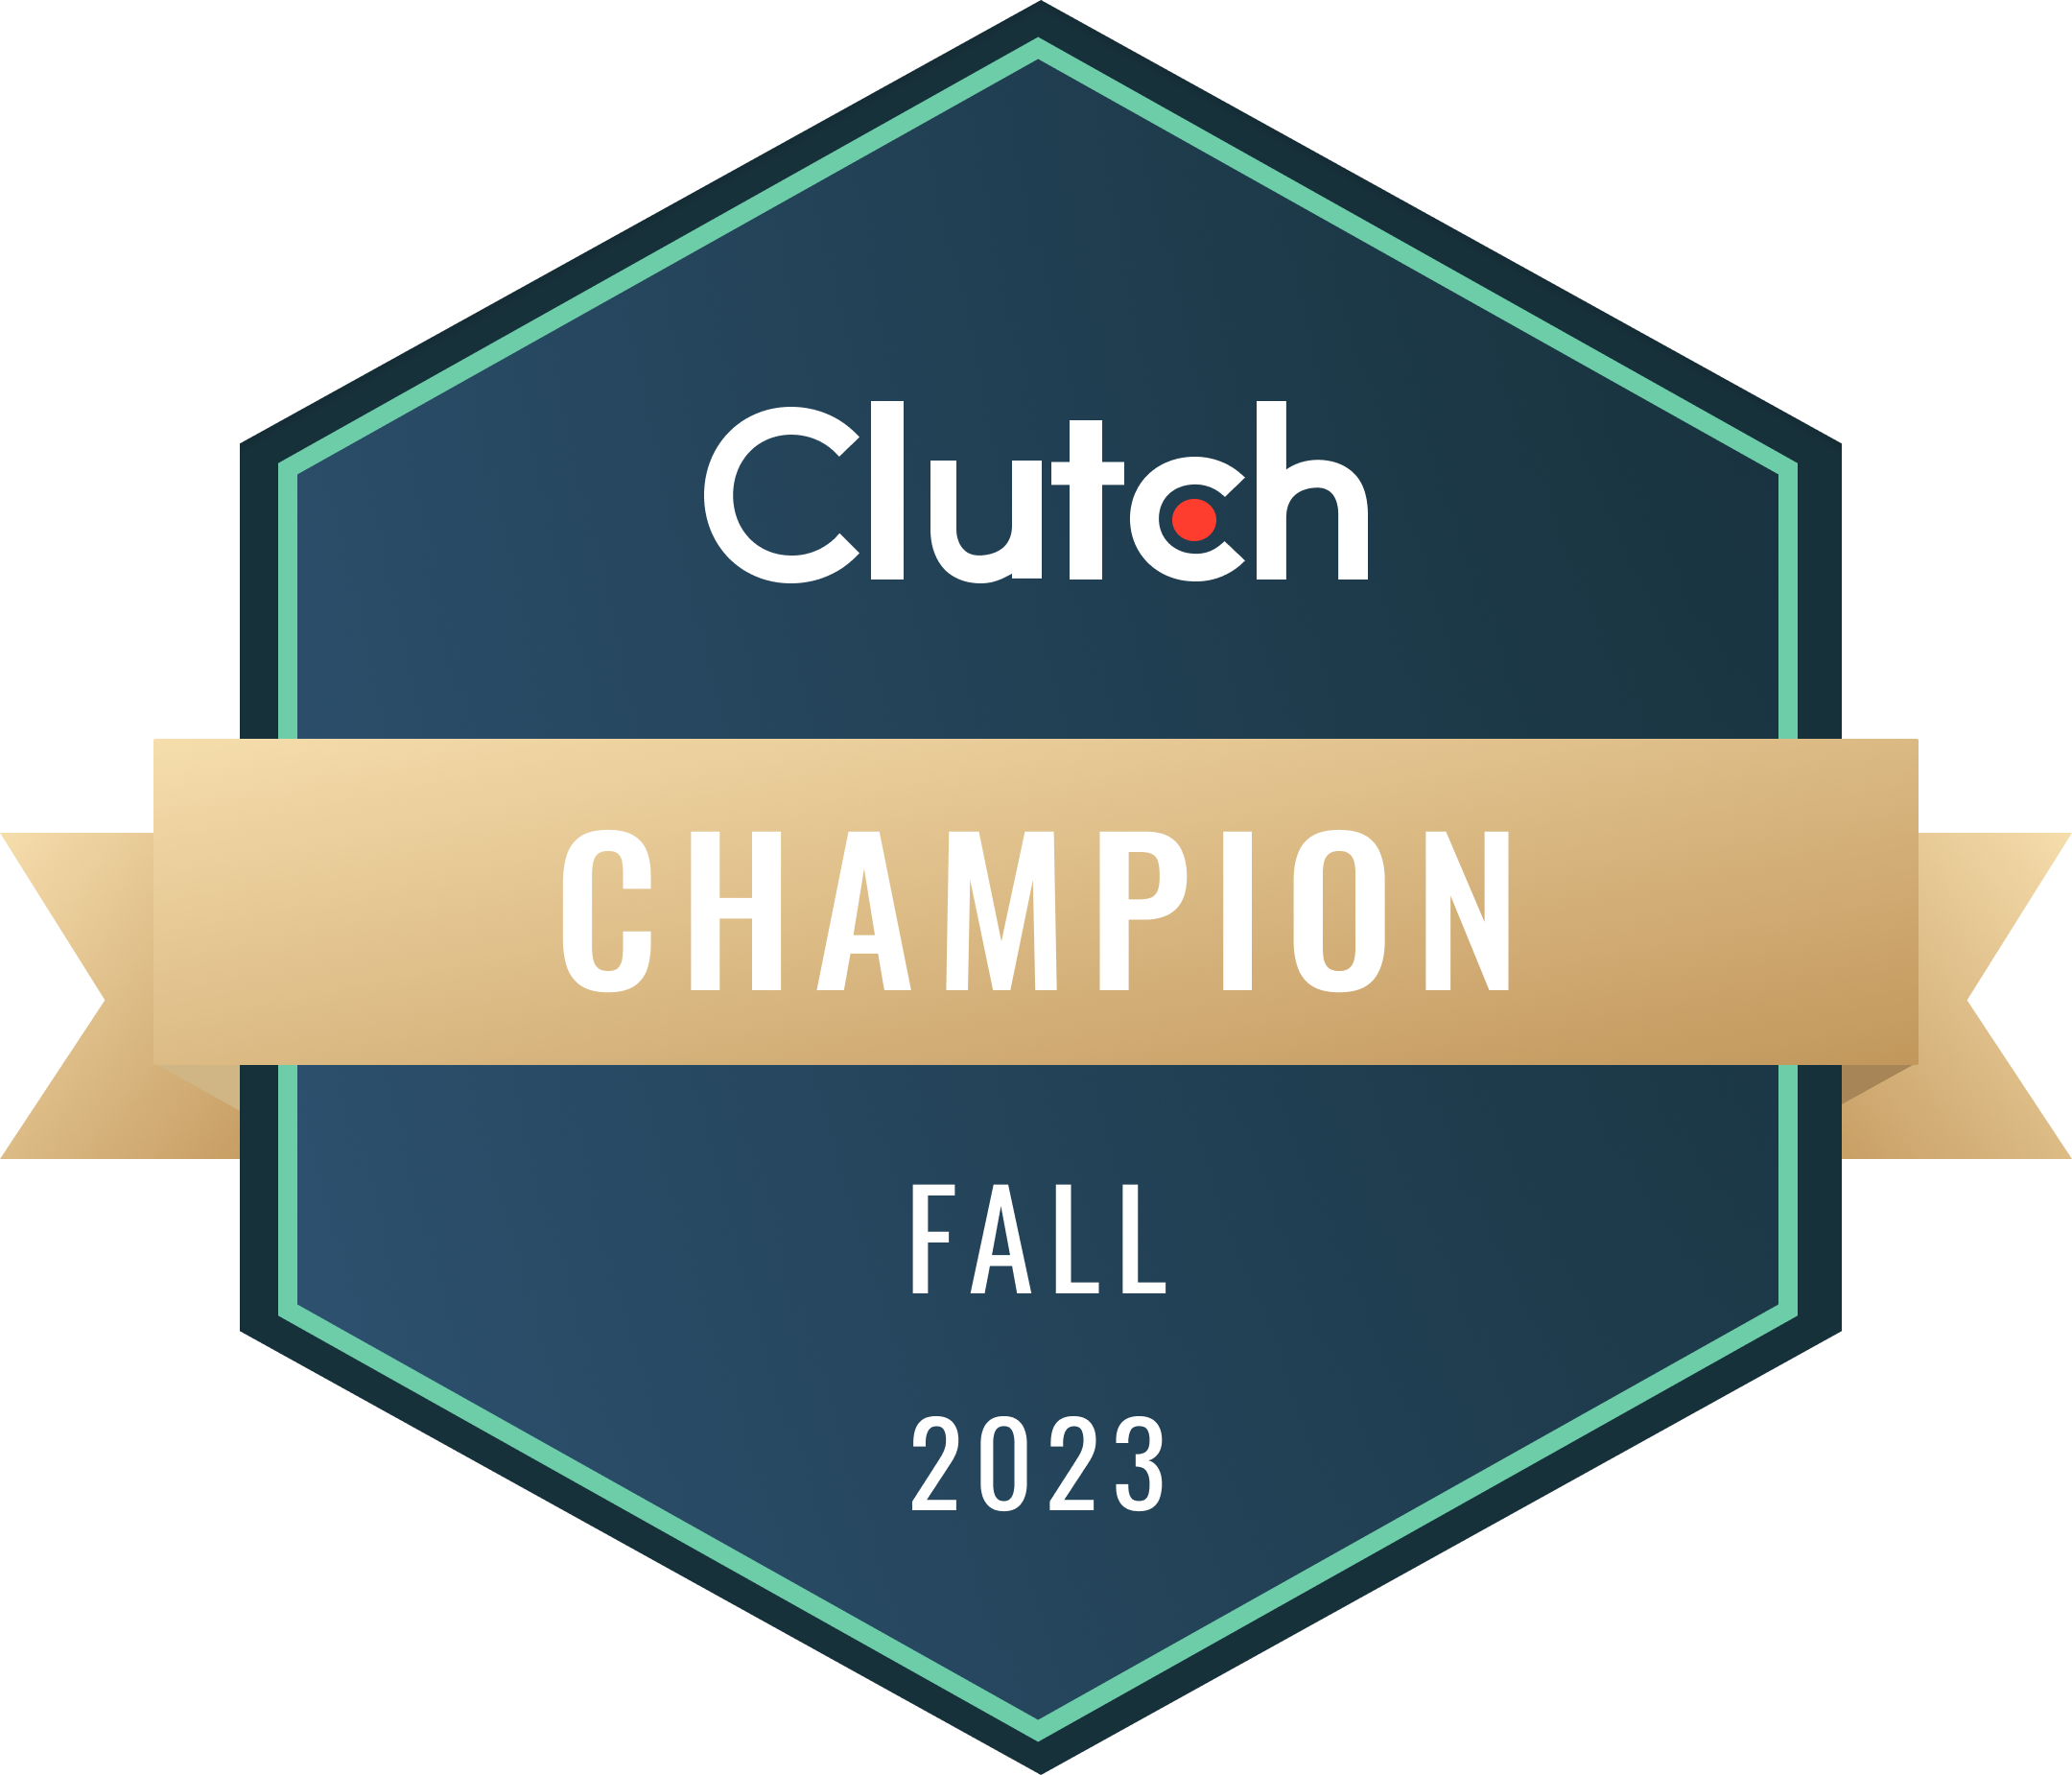 Clutch Champion 2023 Award